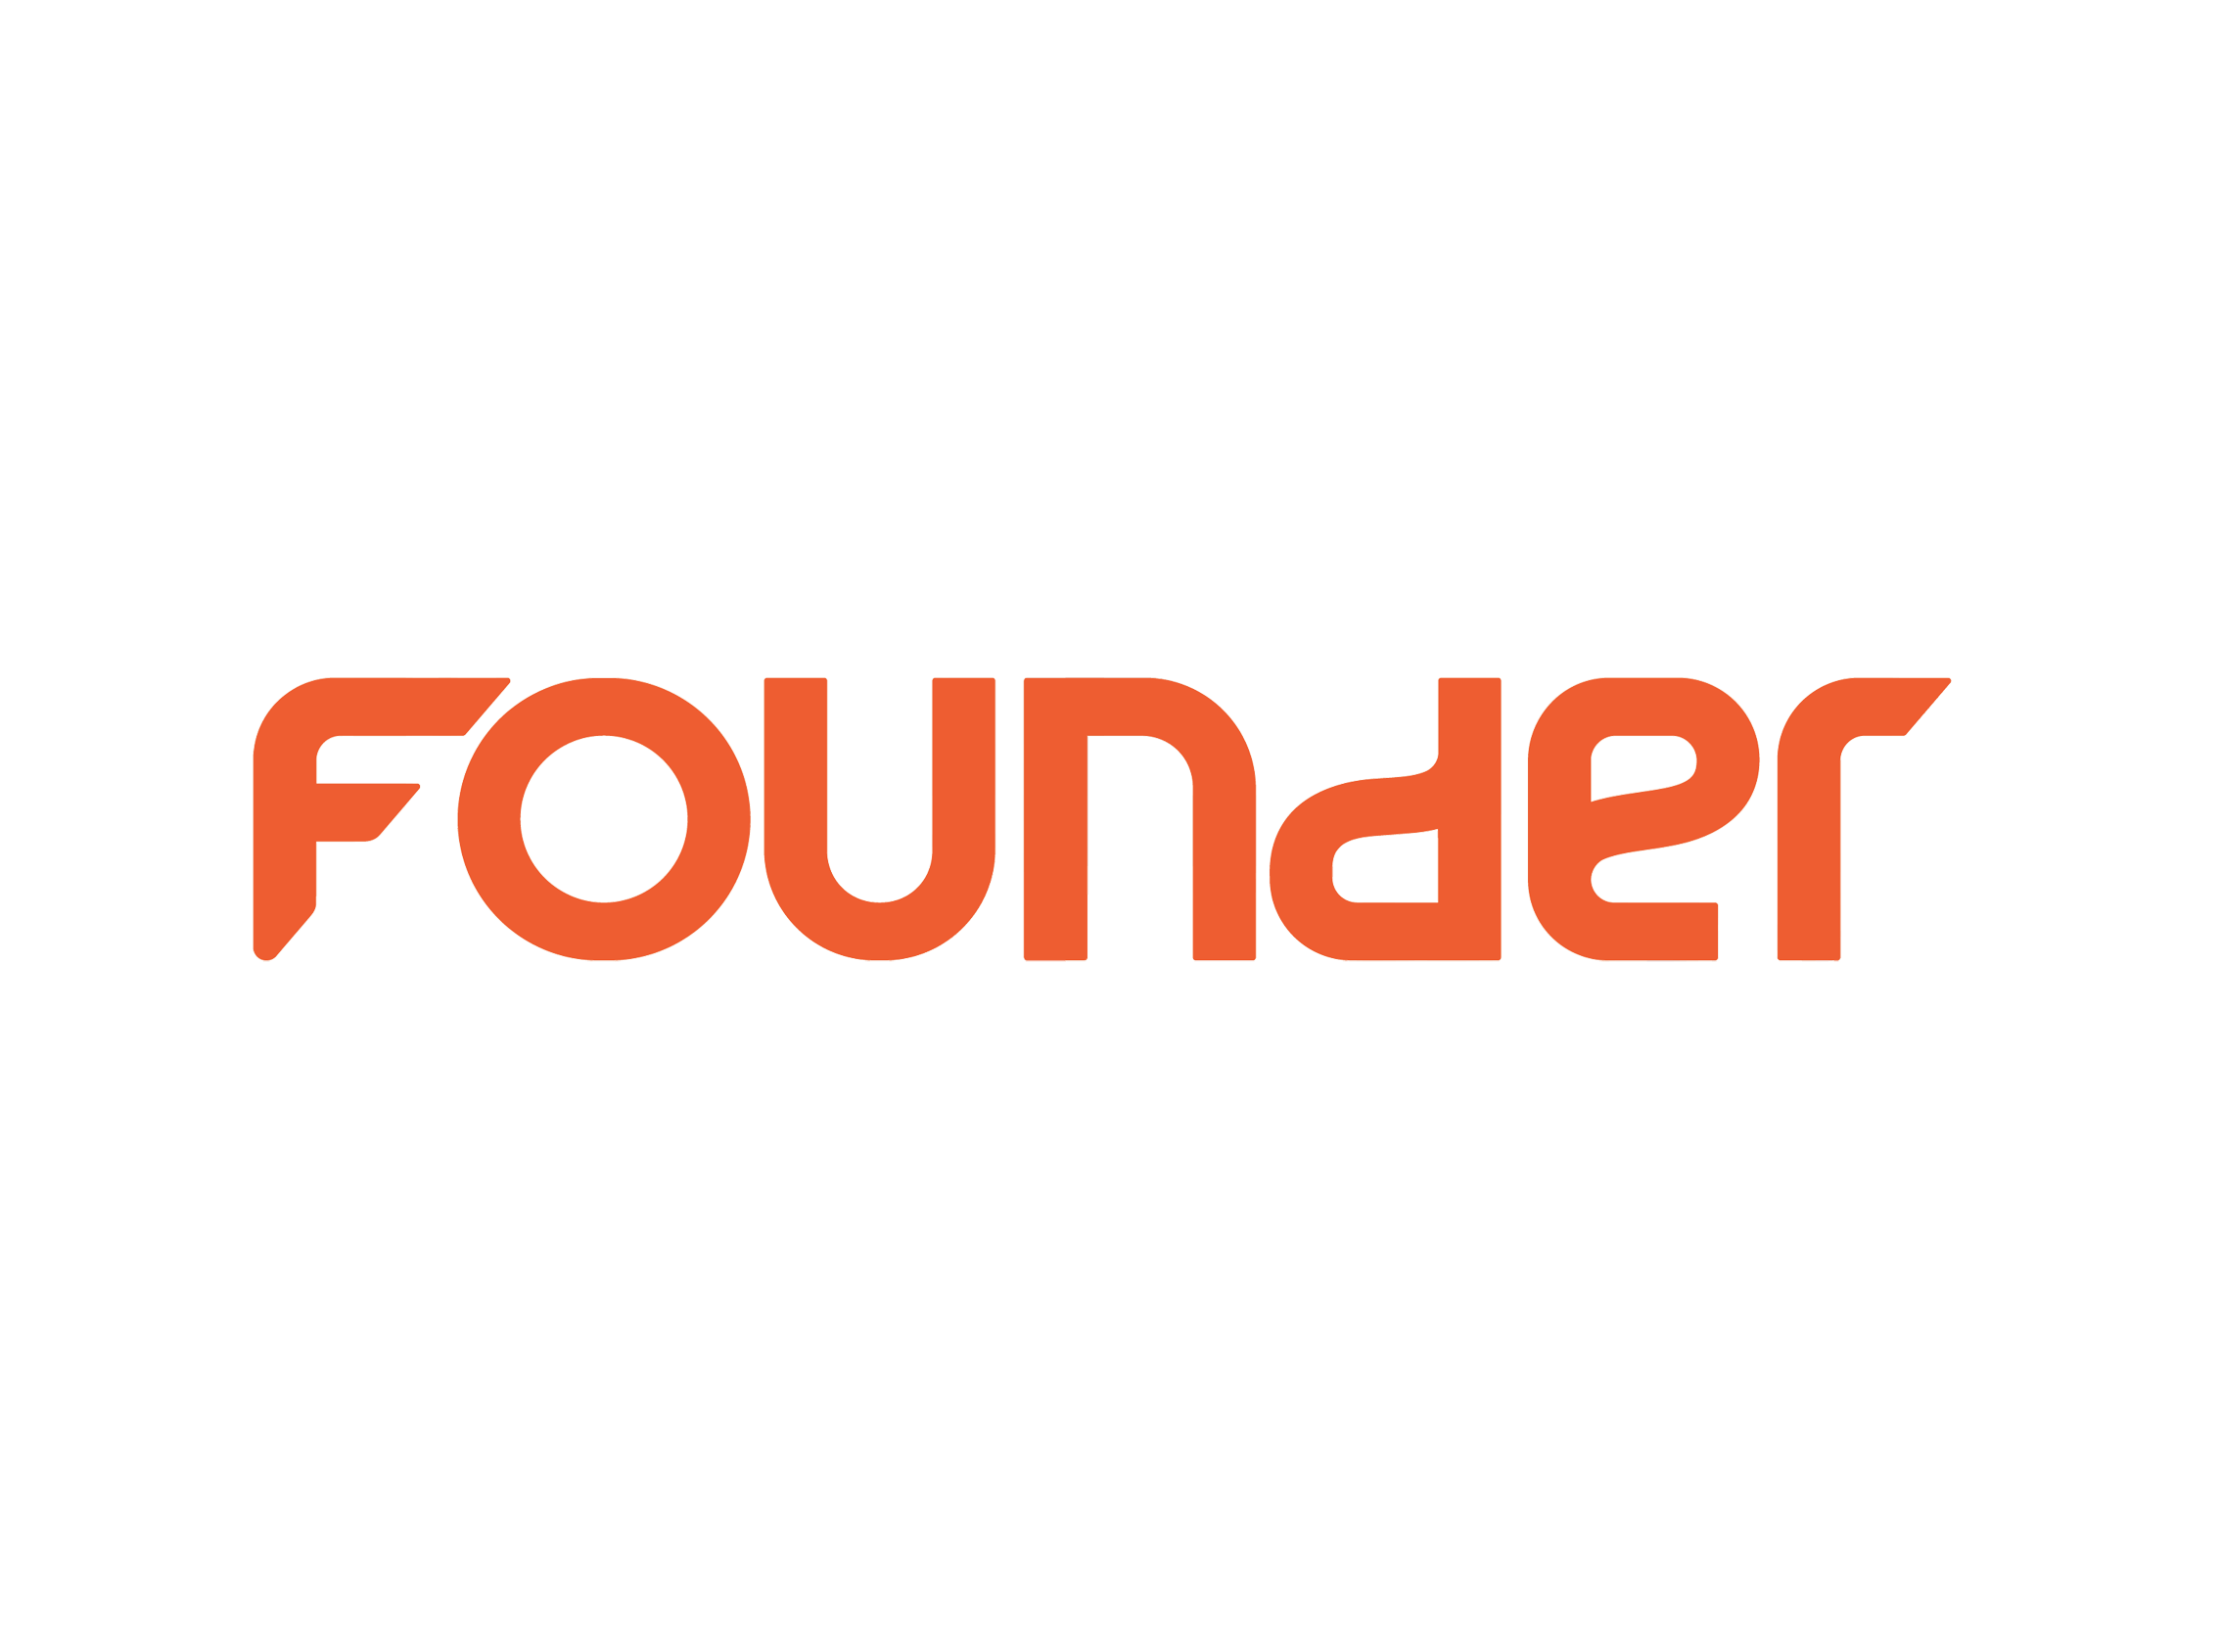 Founders Logo - Founders Logos